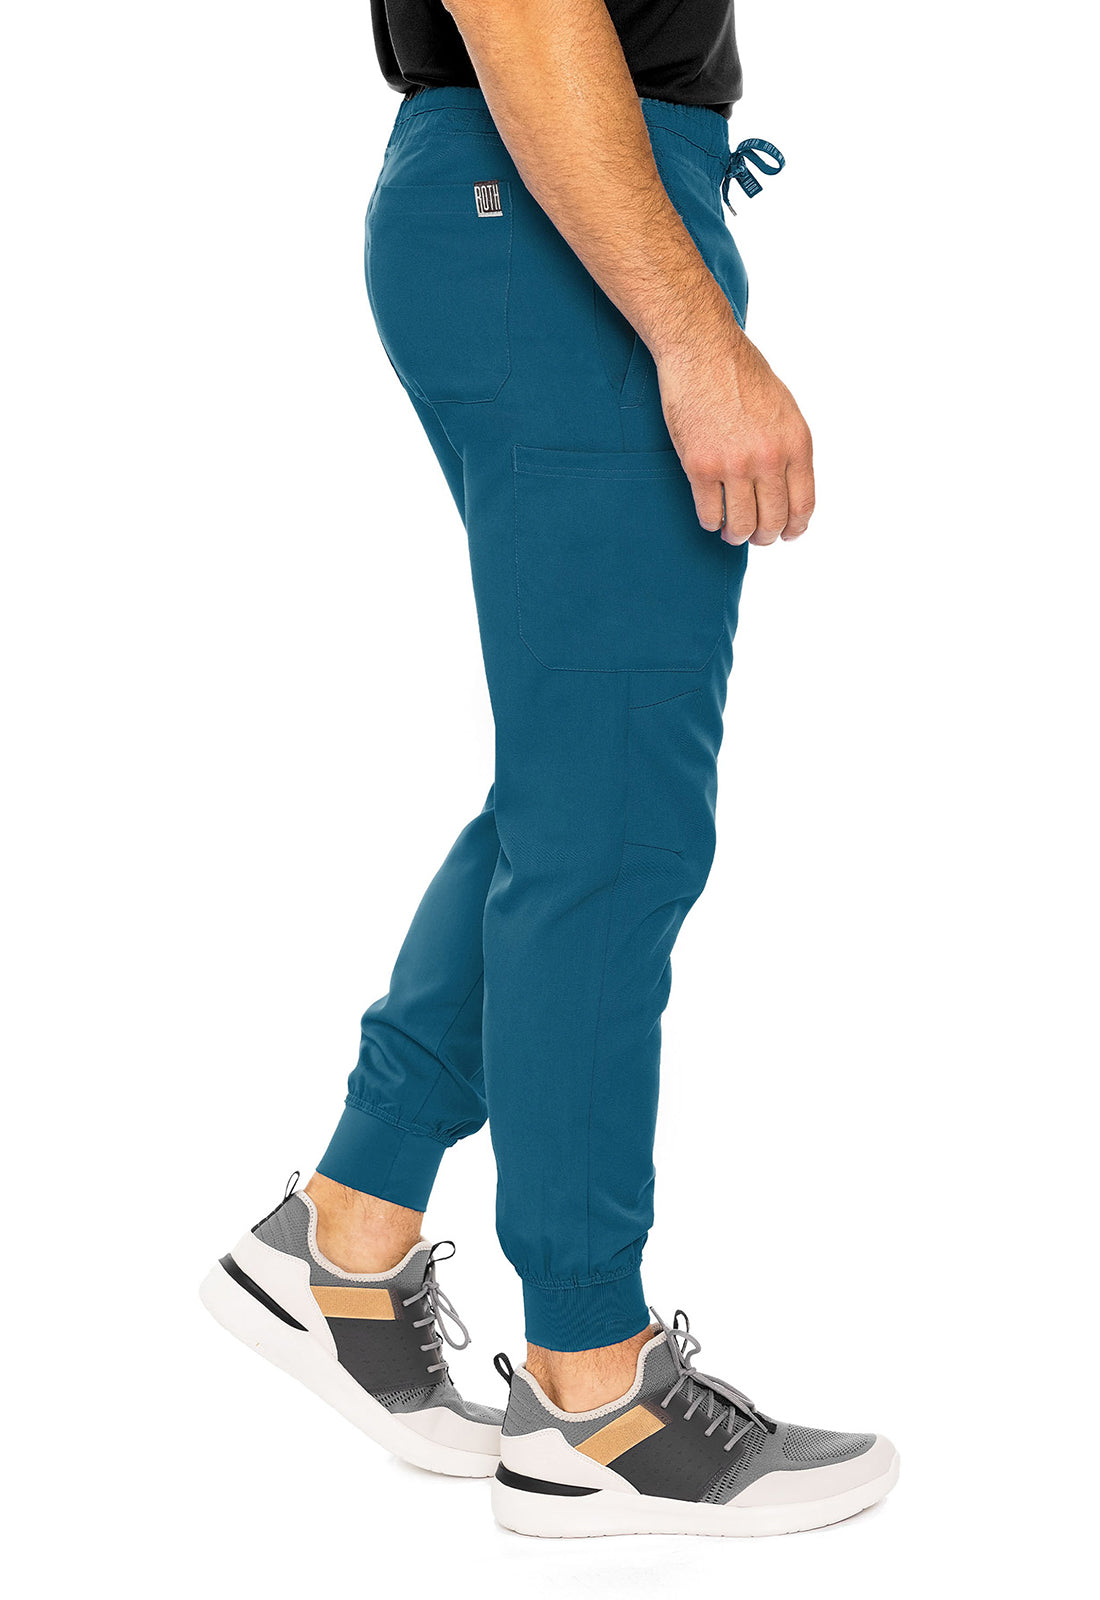 Tall Rothwear Pant - Men's Bowen Jogger Scrub Pant Men's Tall Scrub Pant Rothwear   